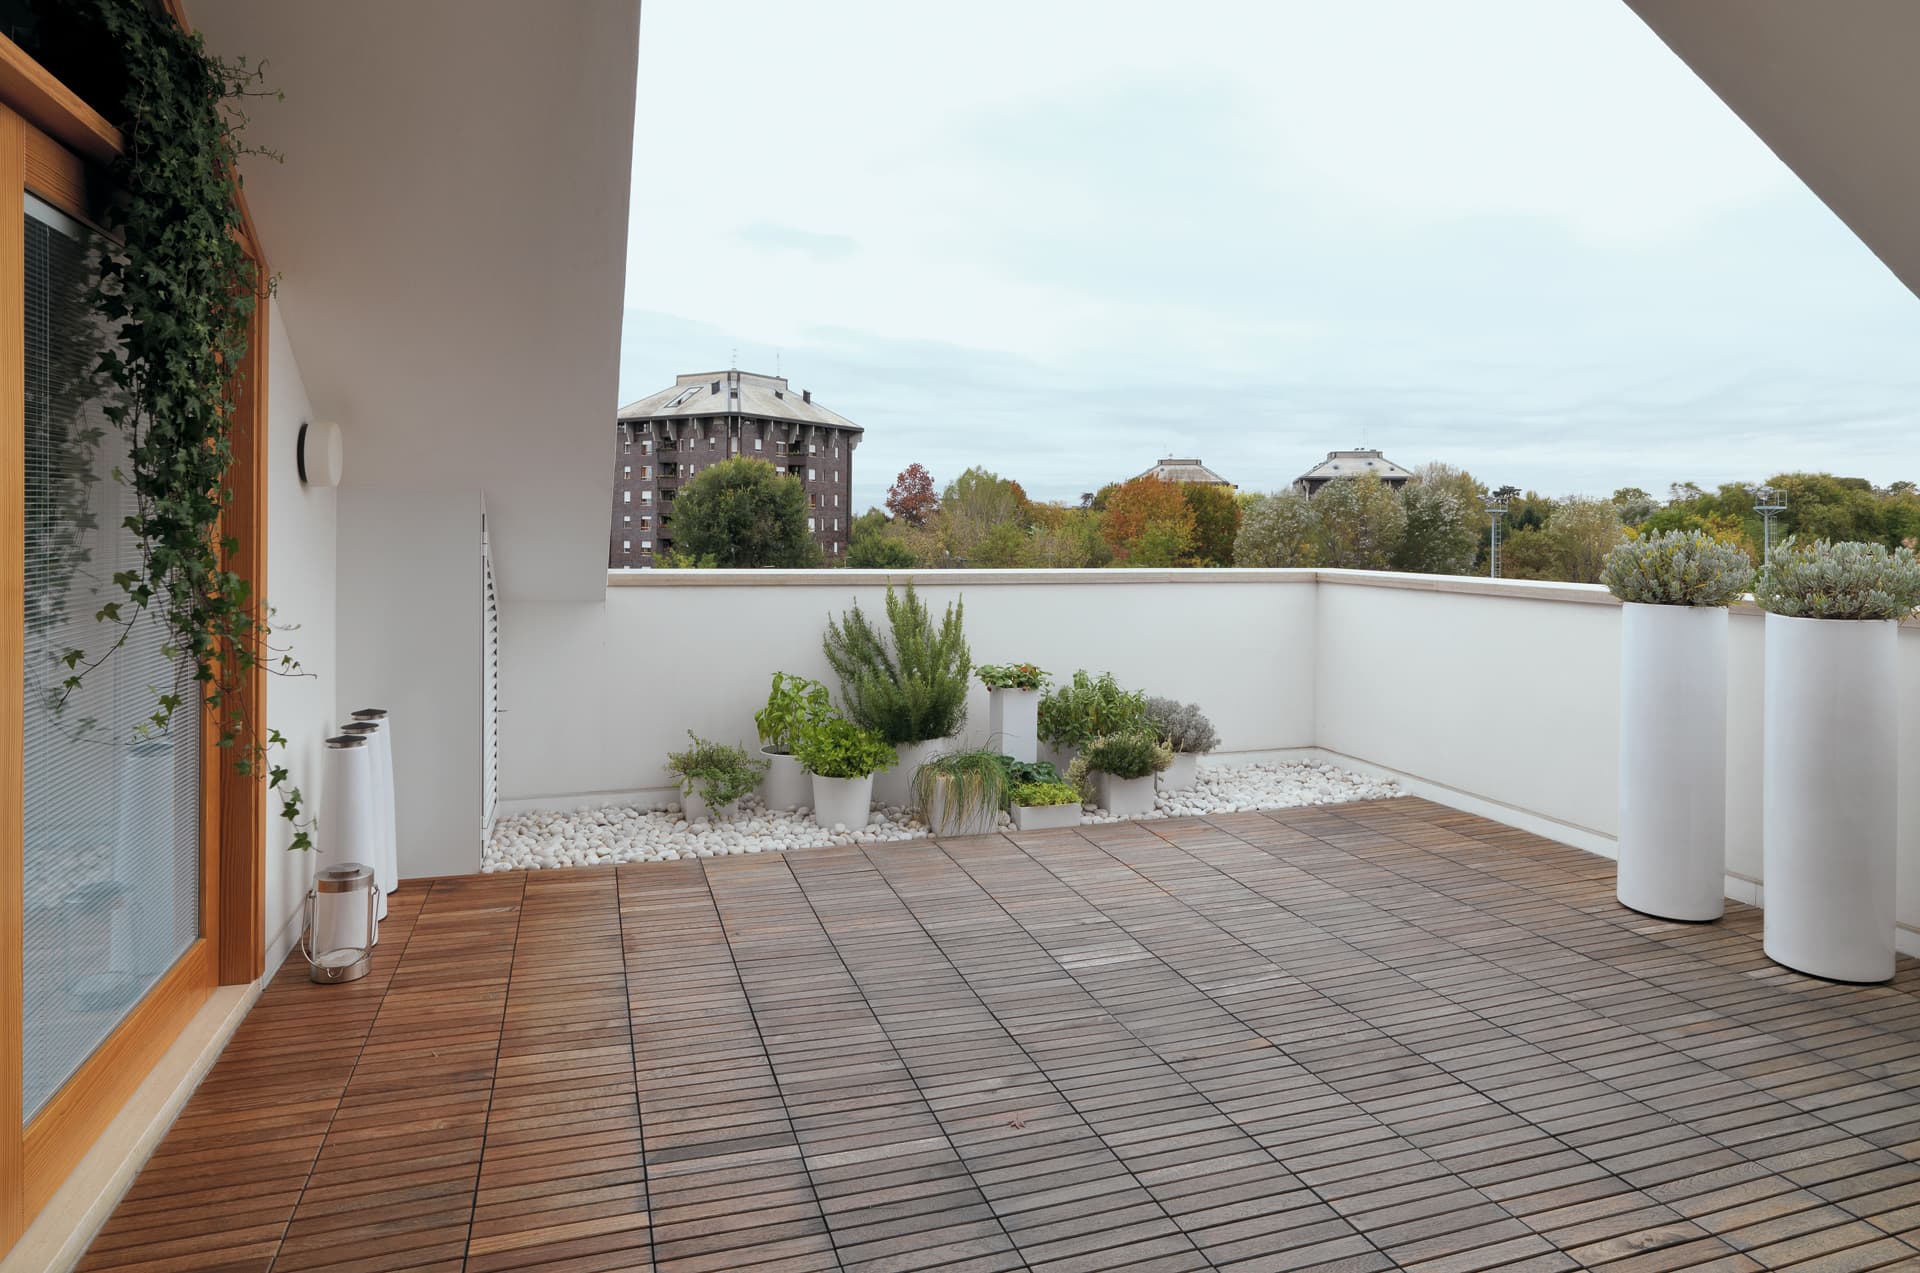 Nos encargamos de impermeabilizar tu terraza en Pontevedra